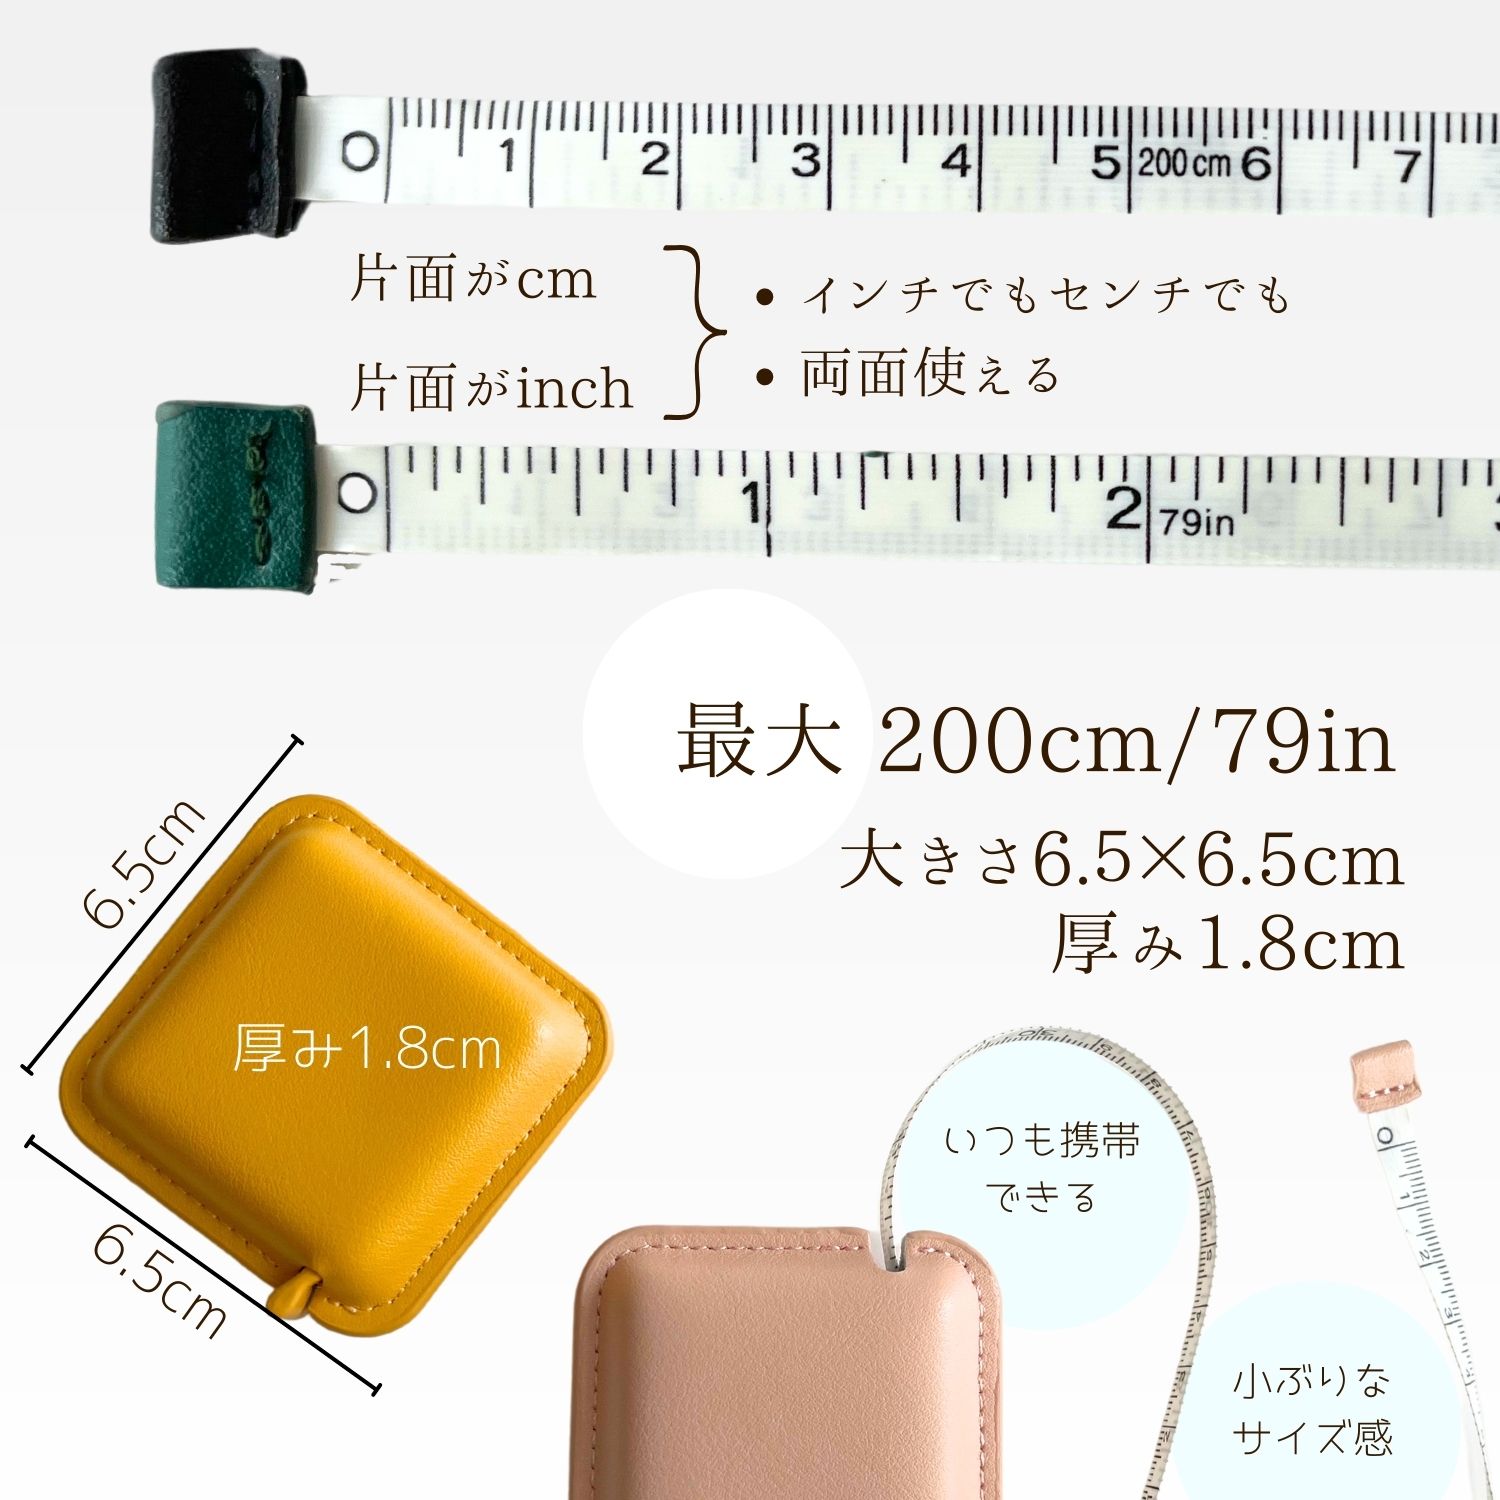 2mメジャーテープはインチ、センチ両方が計測可能。片面inch、片面cm